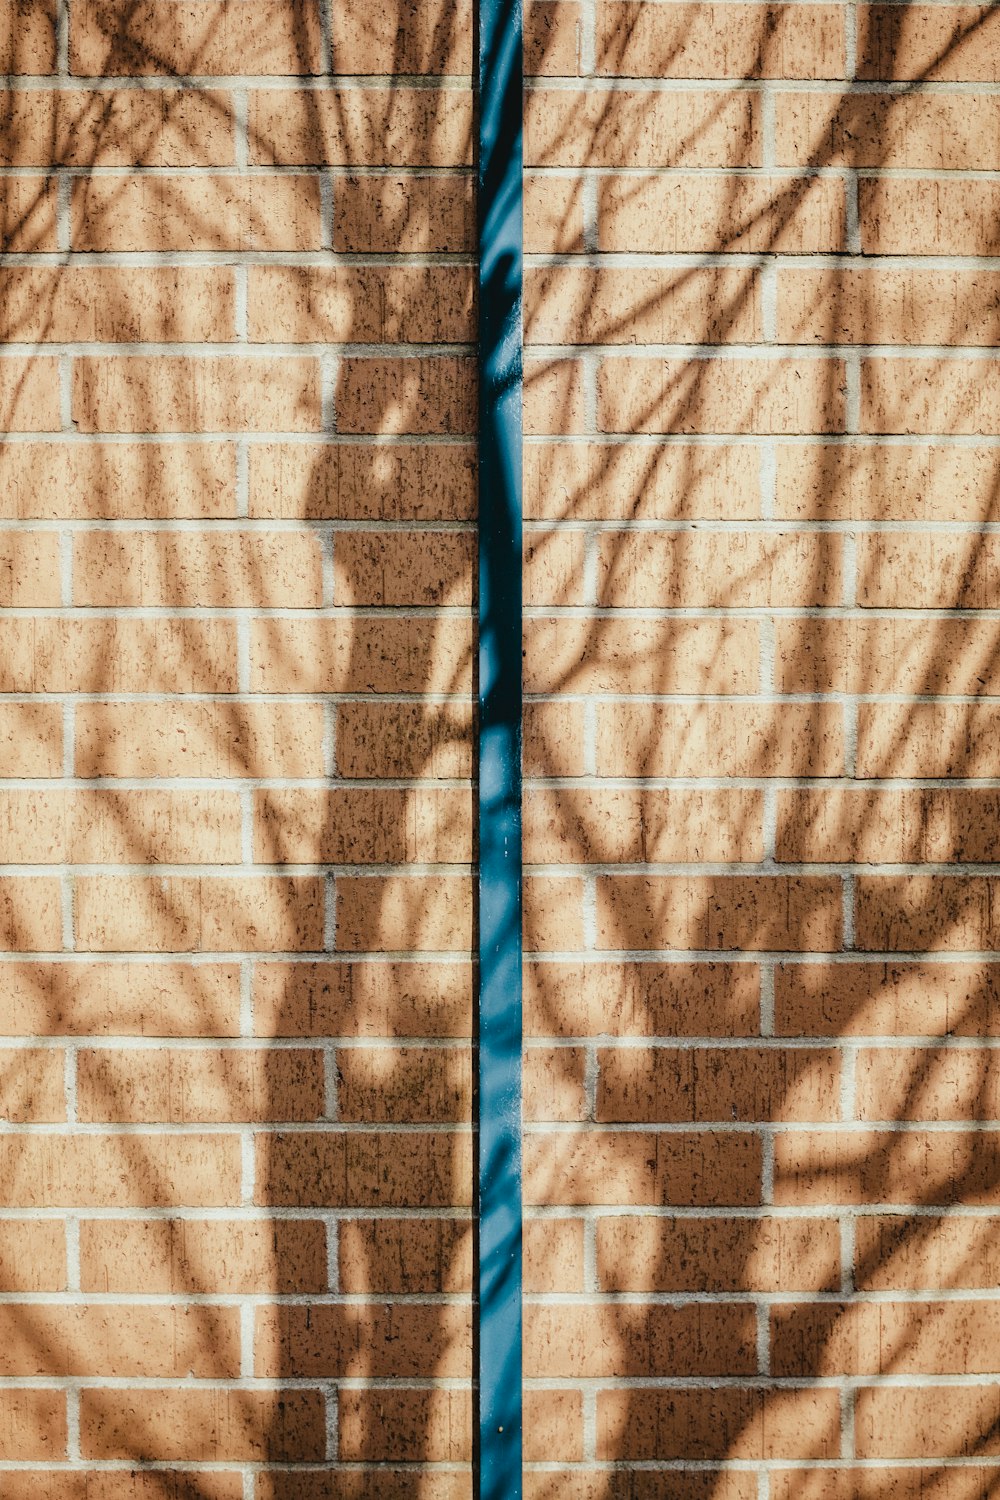 blue bar on brown concrete brick wall